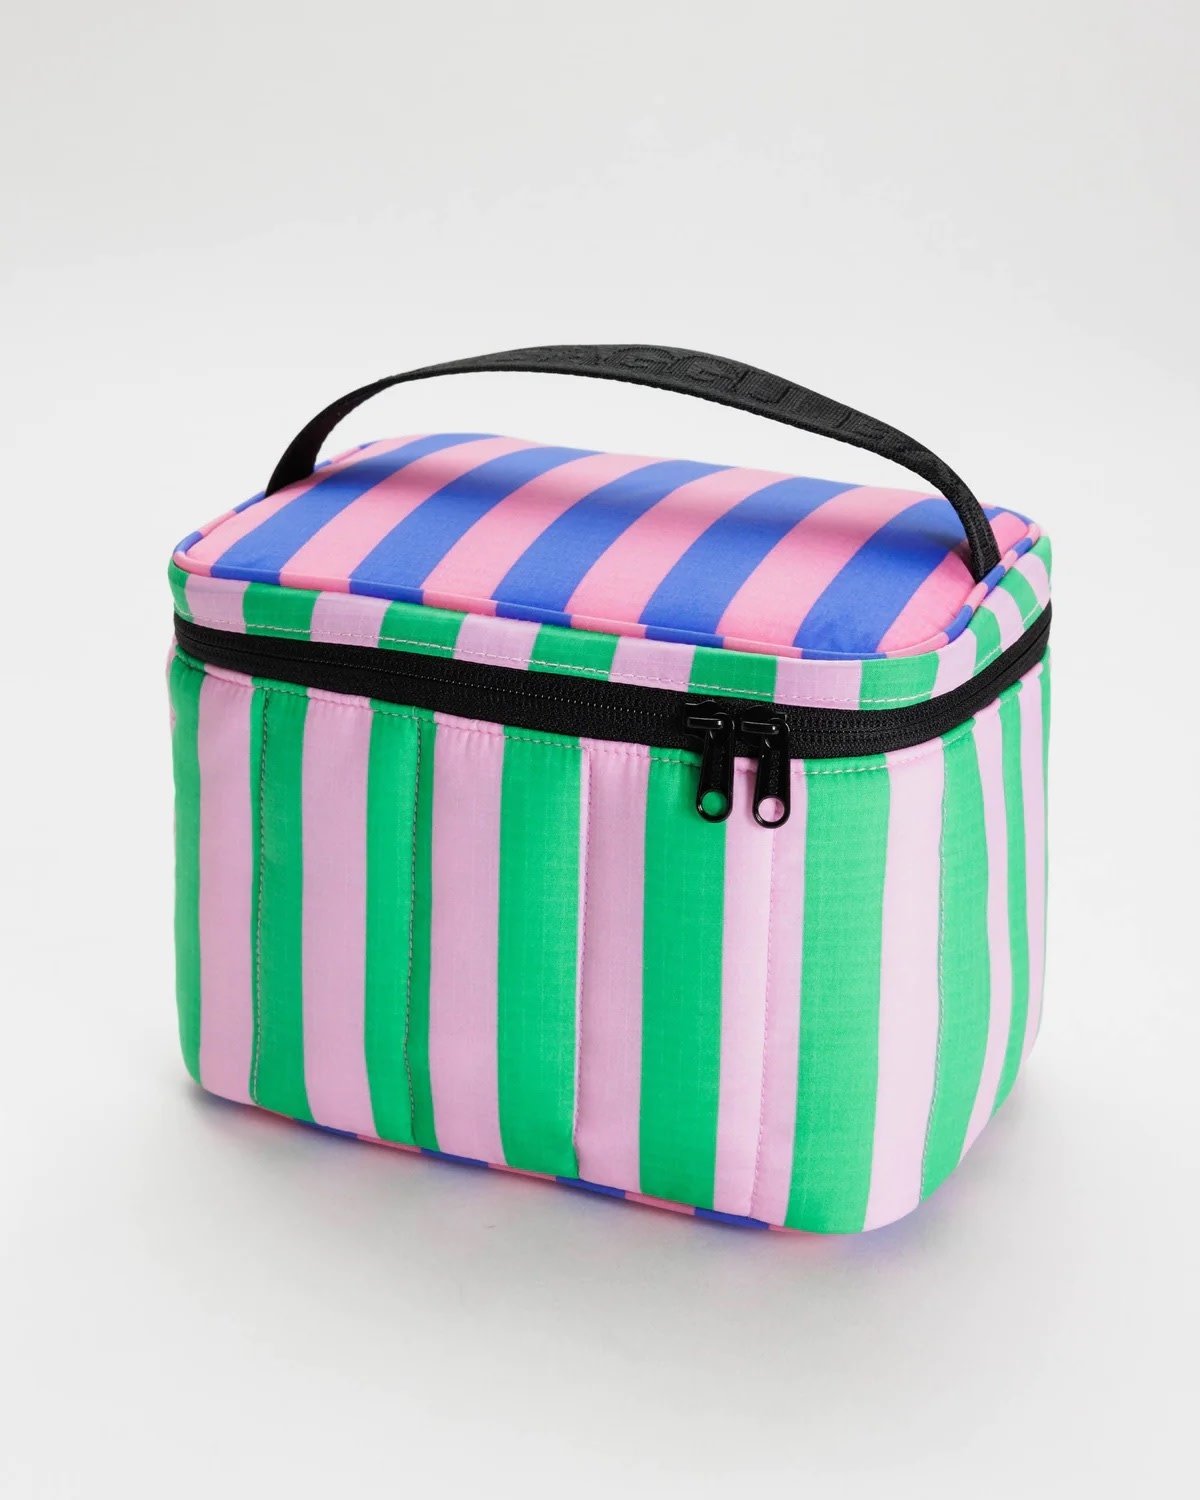 Baggu - BA Baggu Puffy Lunch Cooler Bag - Multiple Color Options!